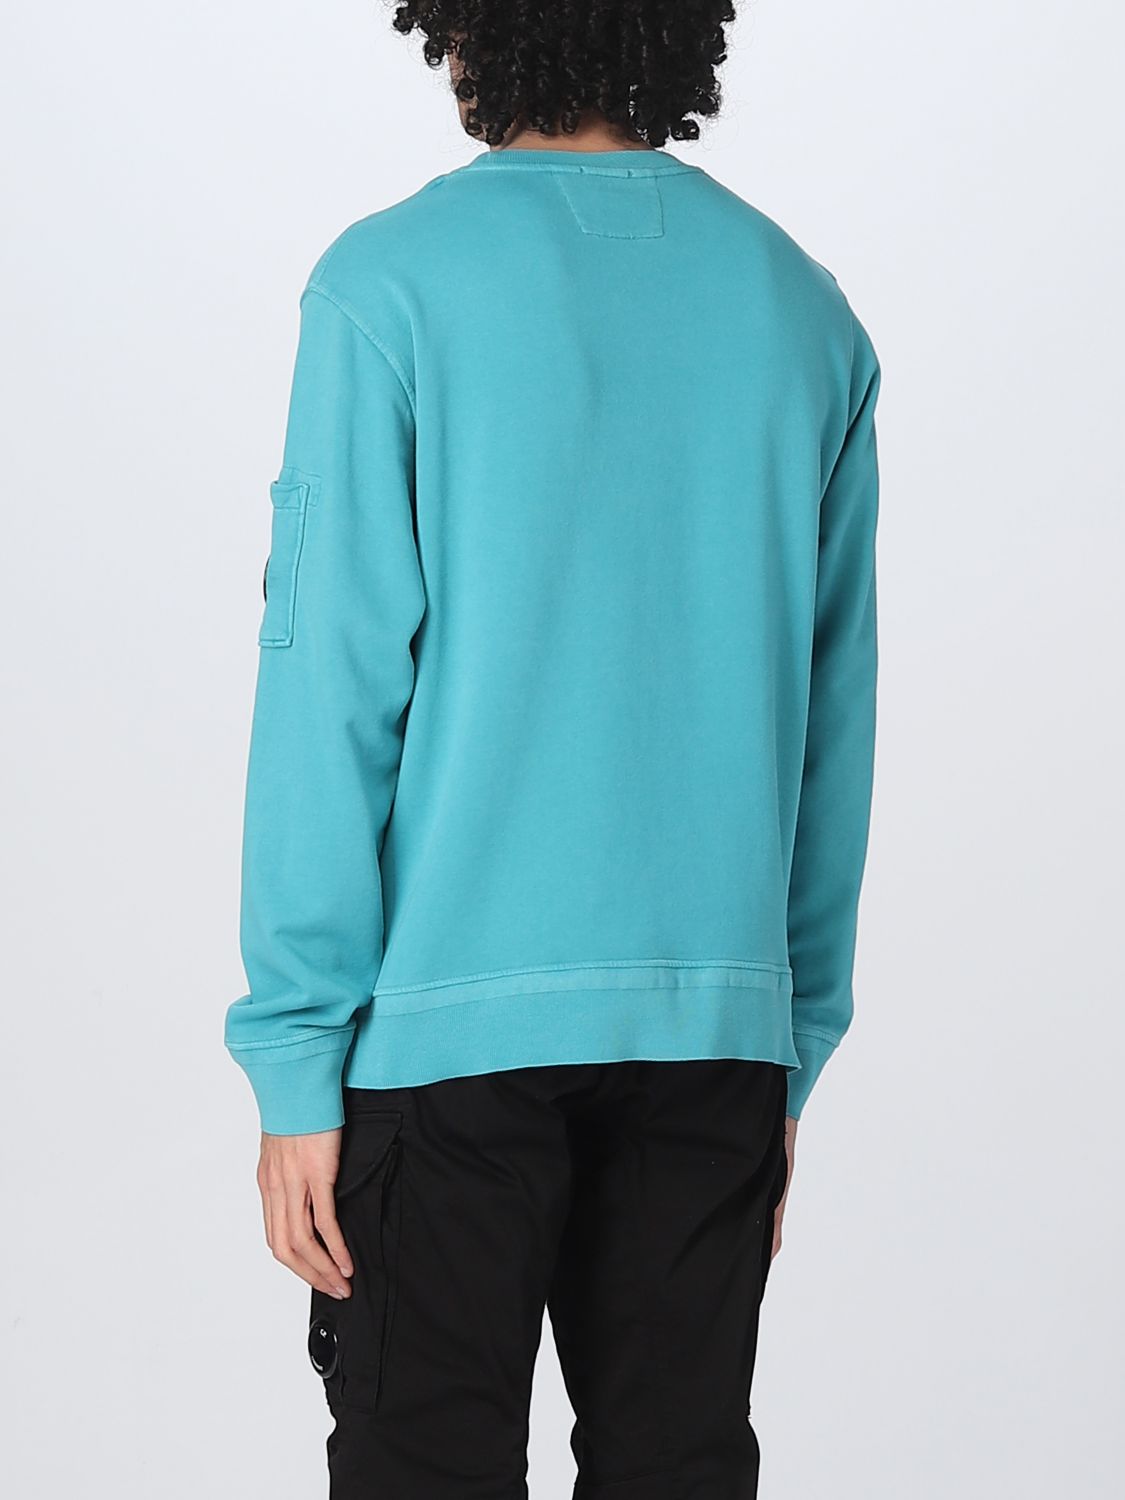 C.P. COMPANY: sweatshirt for man - Turquoise | C.p. Company sweatshirt ...